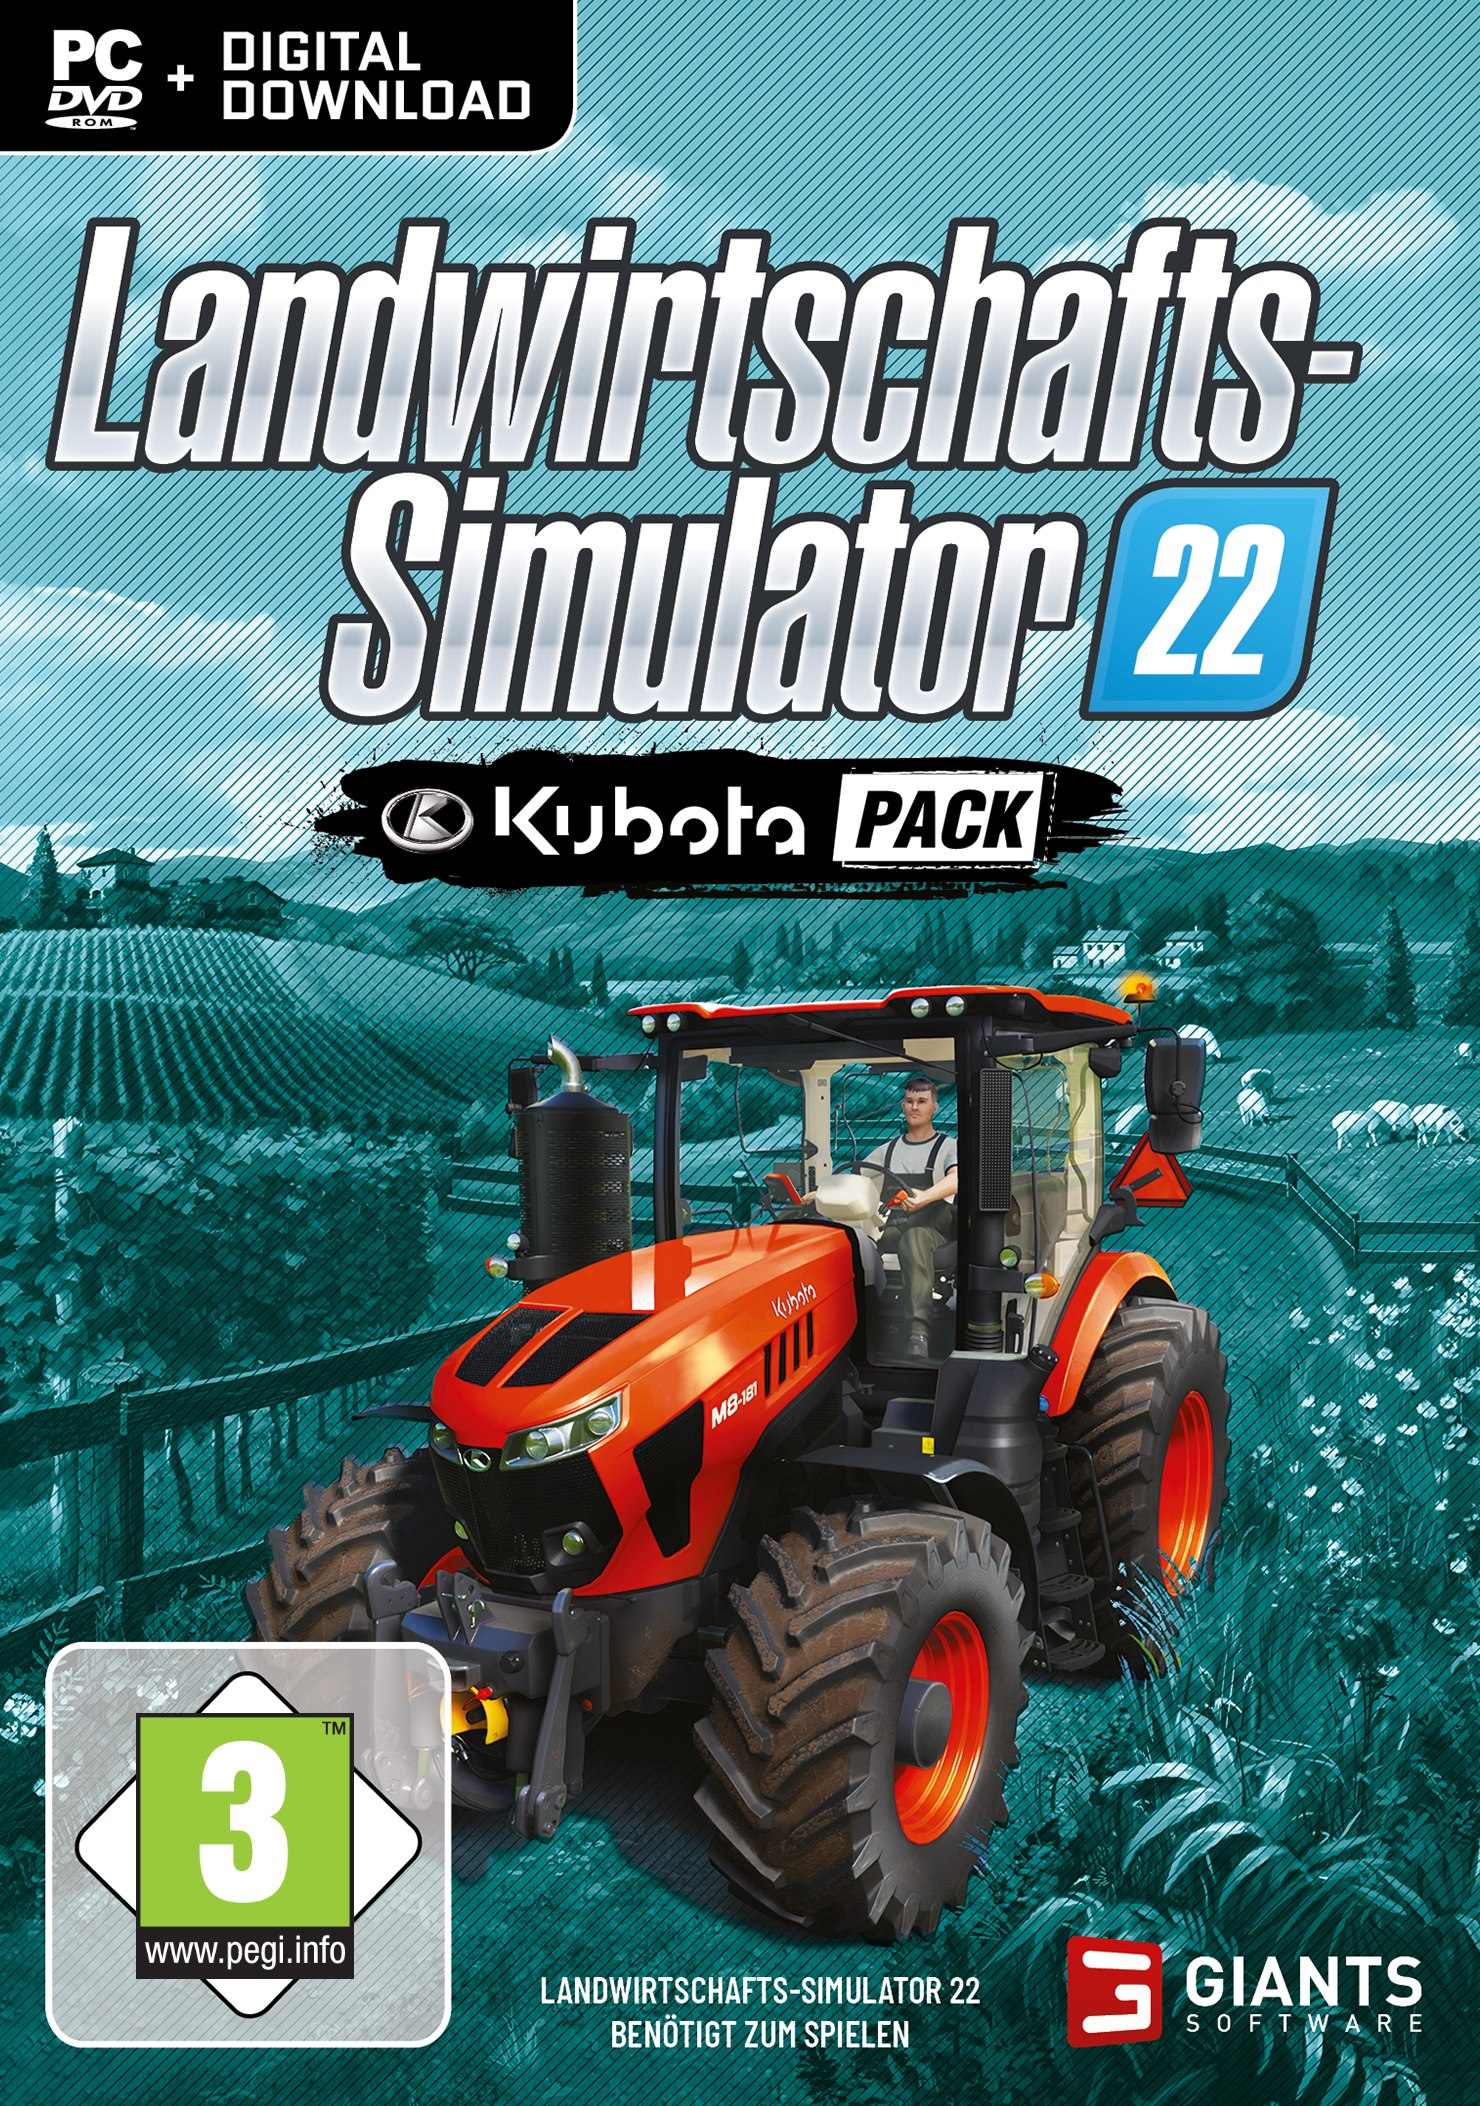 Landwirtschafts-Simulator 22 - Kubota Pack [Add-On] [DVD] [PC] (D/I) - Thali